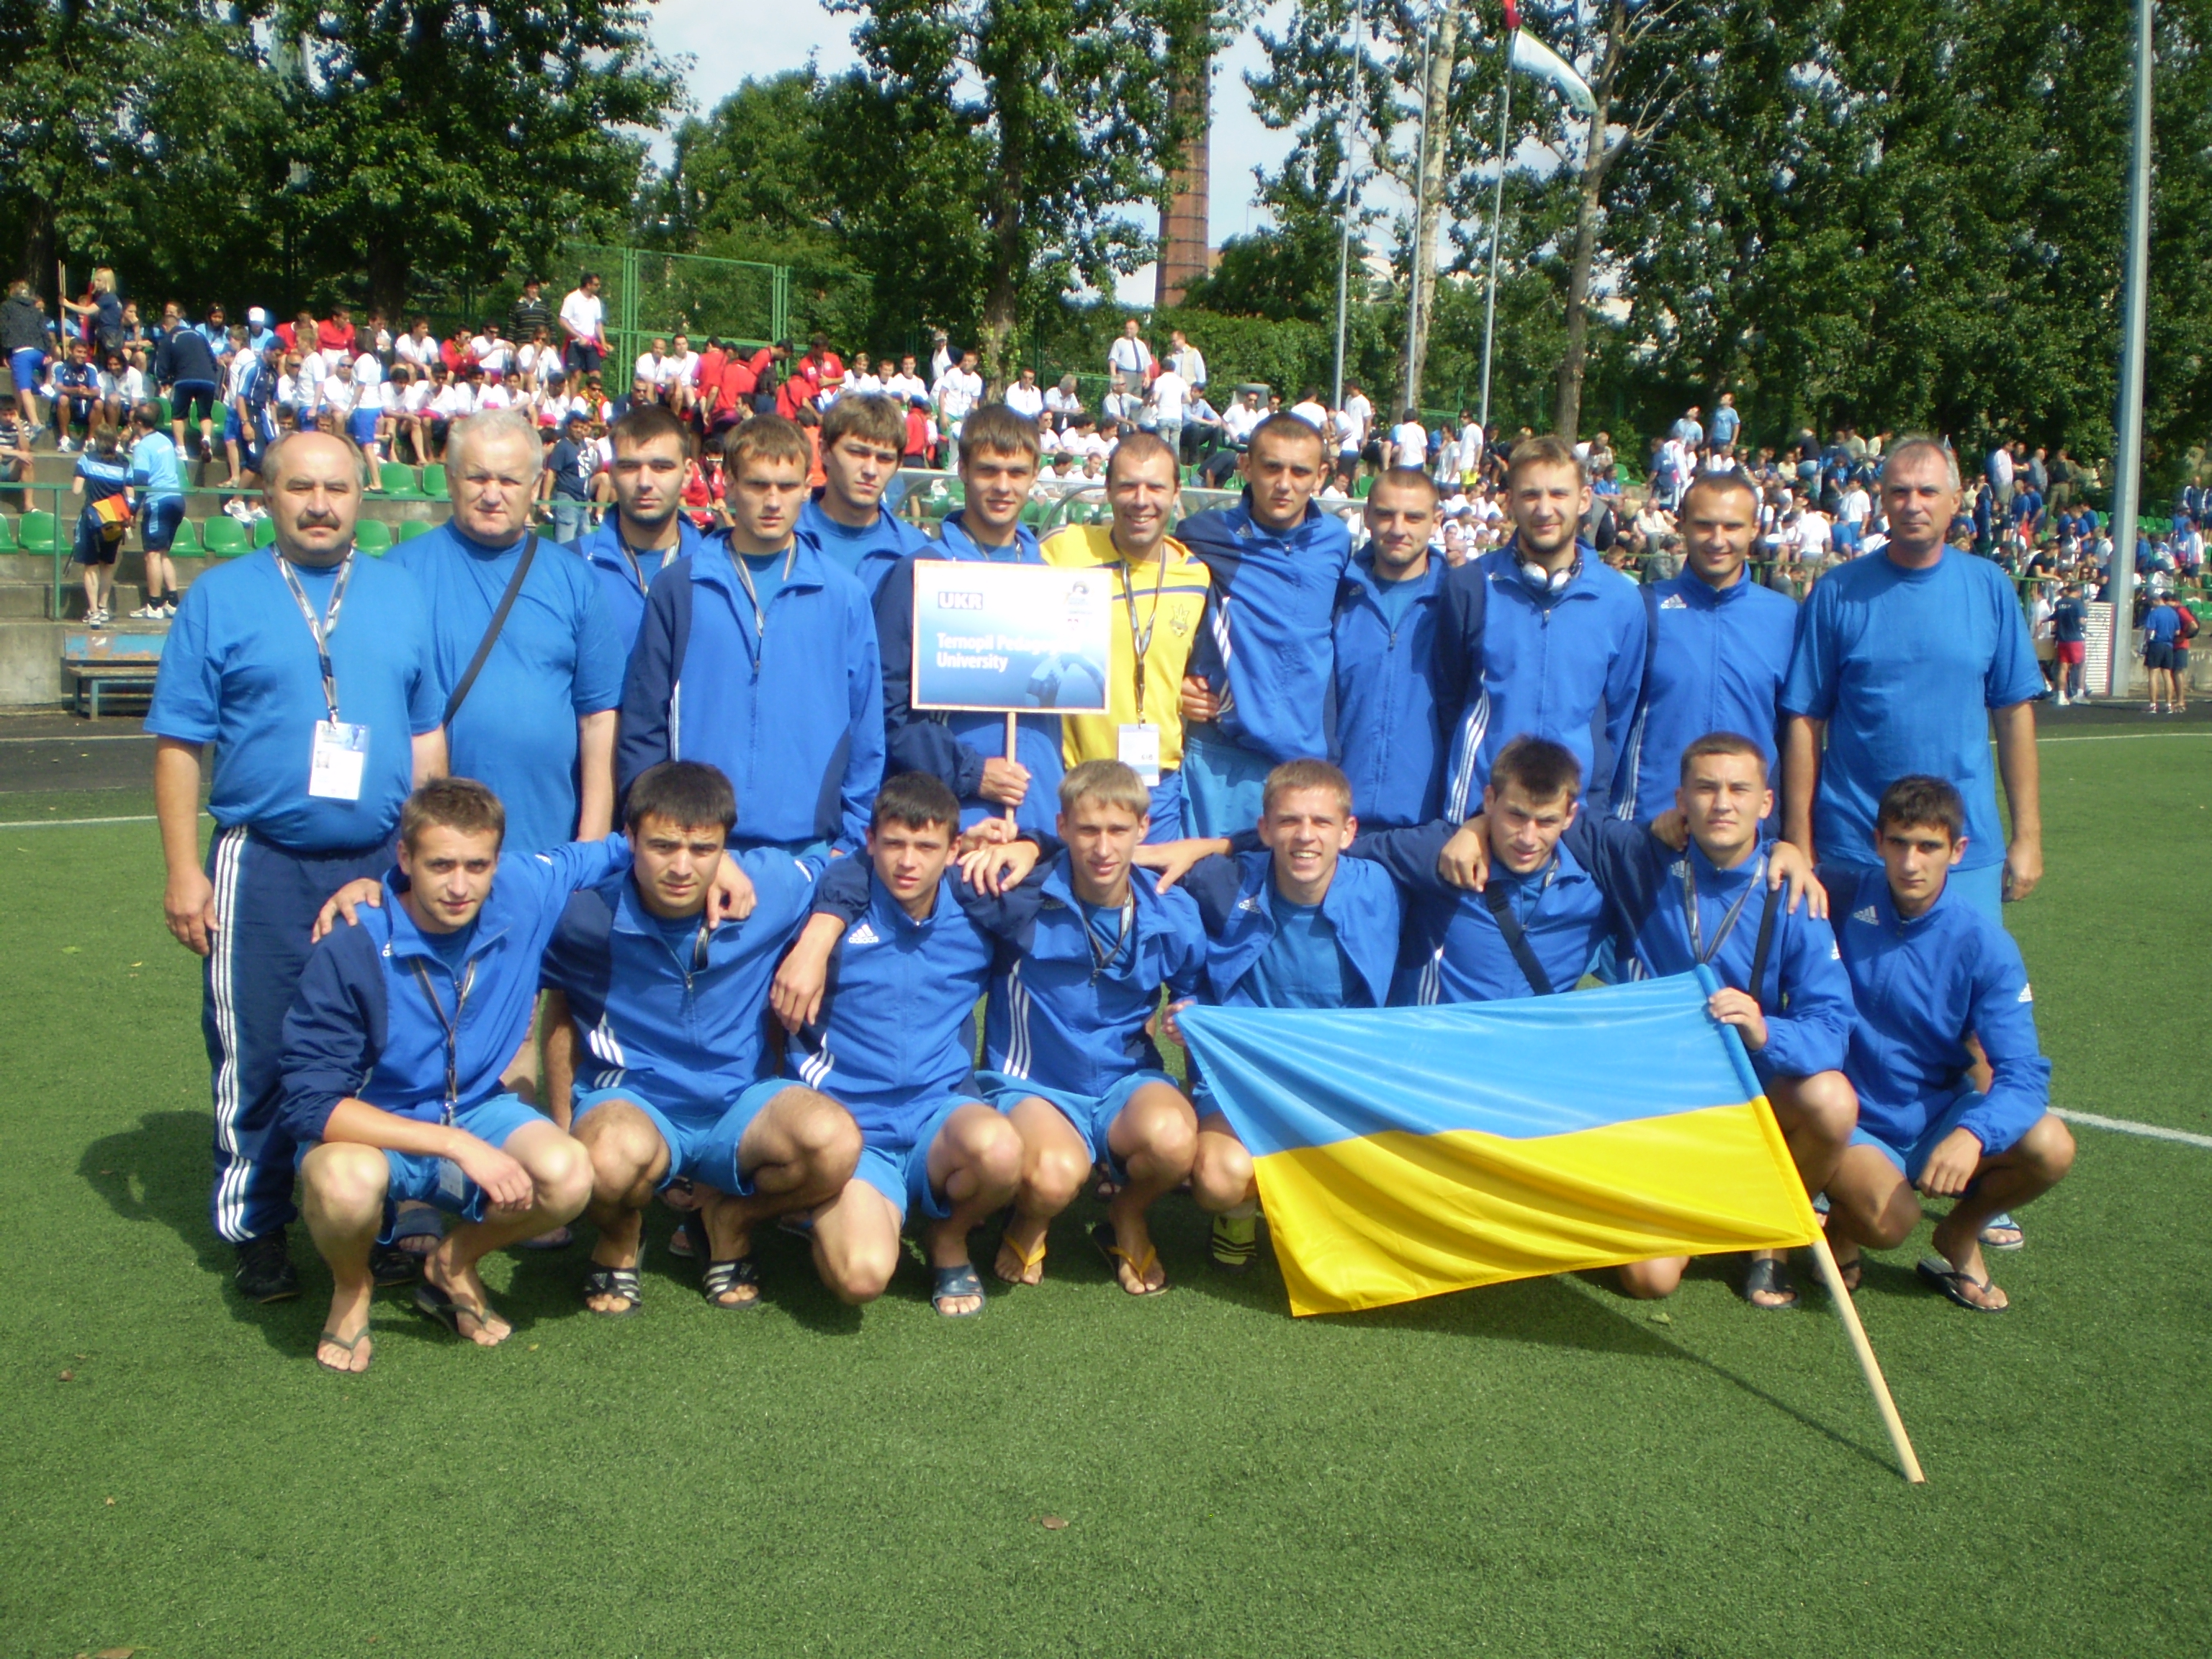  European champions among student football teams